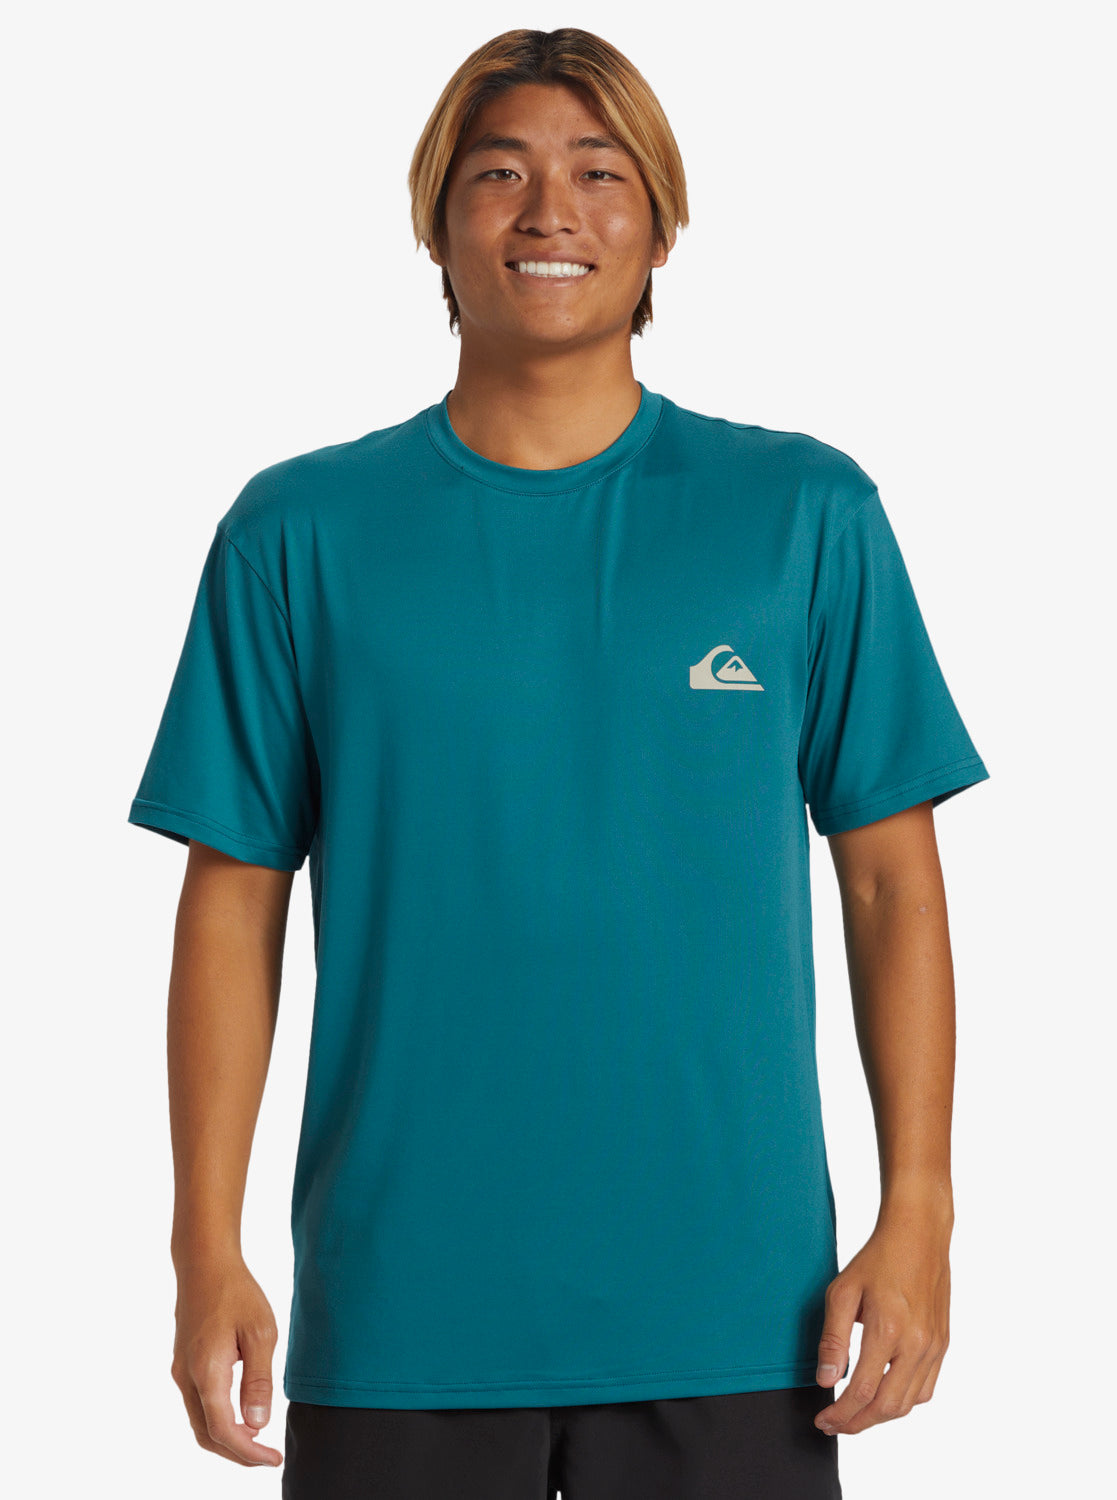 Quiksilver Everyday Surf UPF Short Sleeve Rash Vest in Cardinal Blue